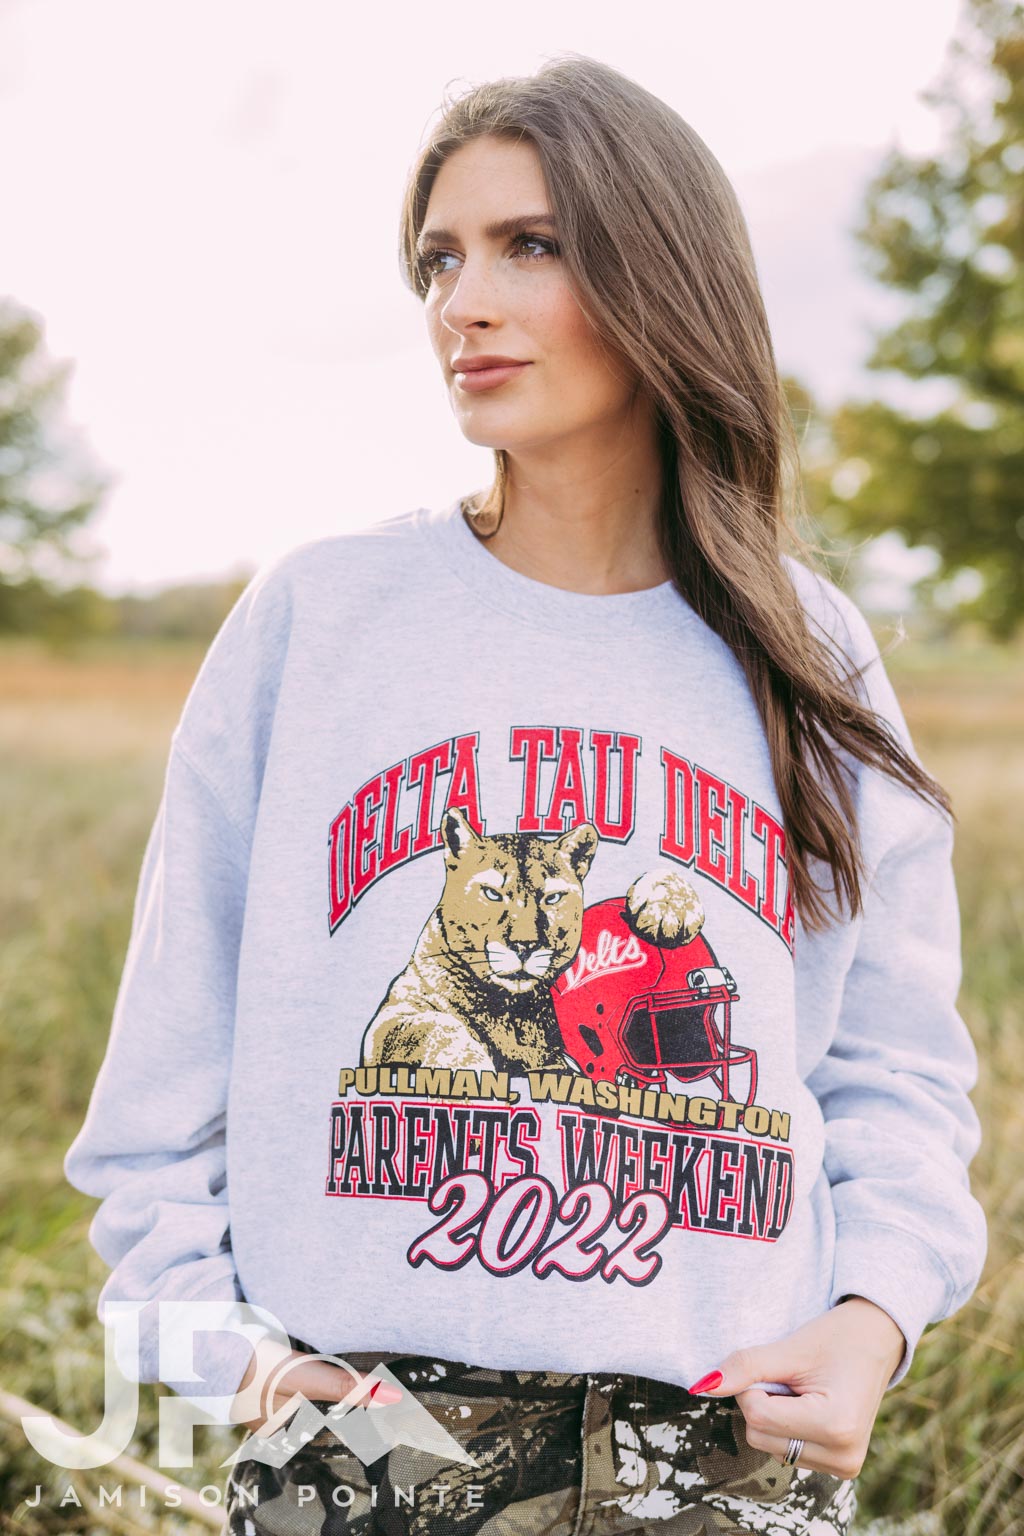 Delta Tau Delta Cougar Parents Weekend Sweatshirt